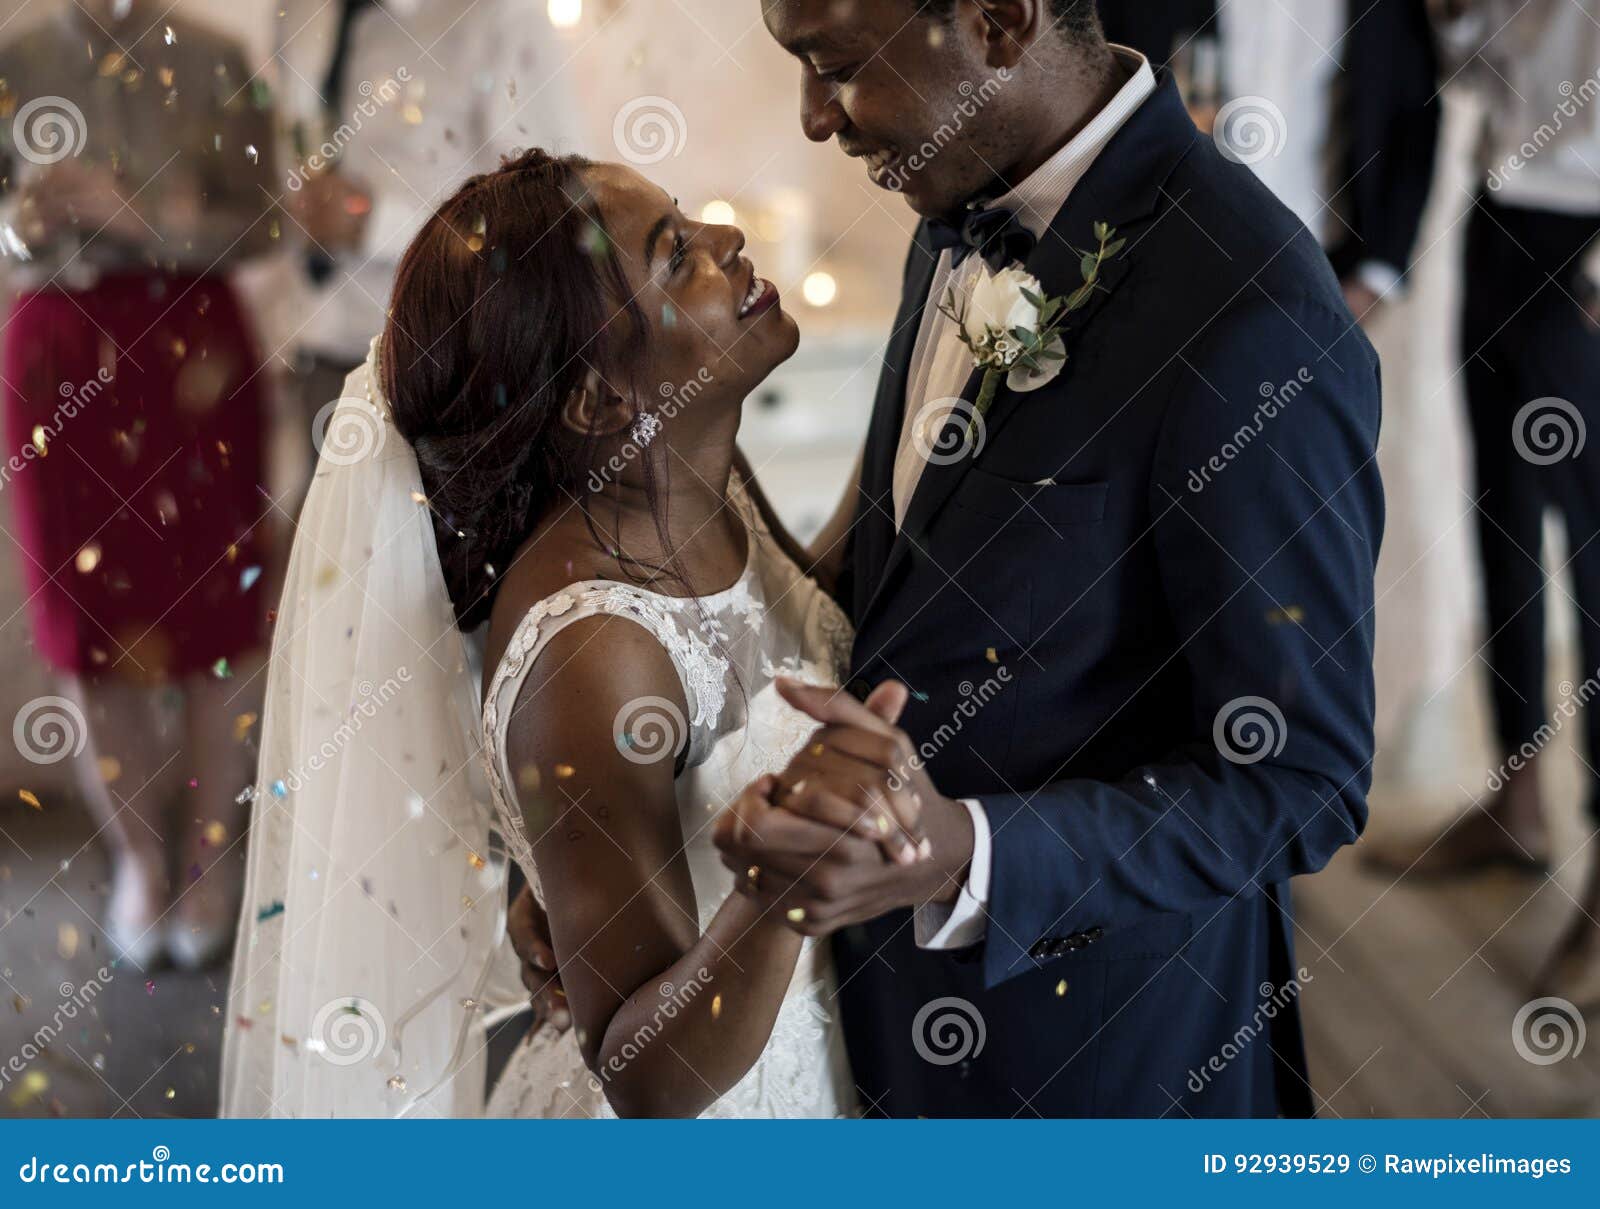 newlywed african descent couple dancing wedding celebration